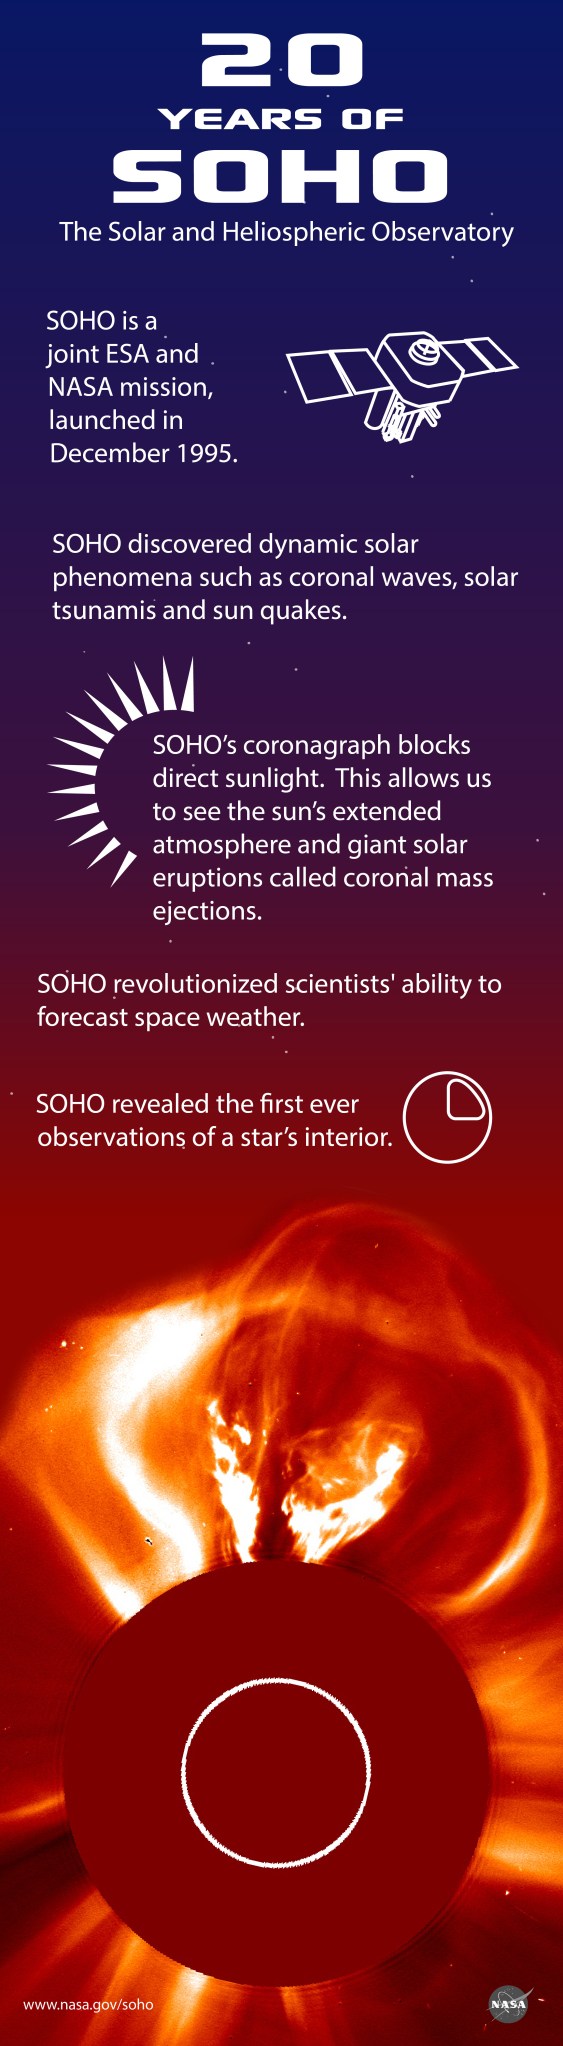 SOHO informational graphic